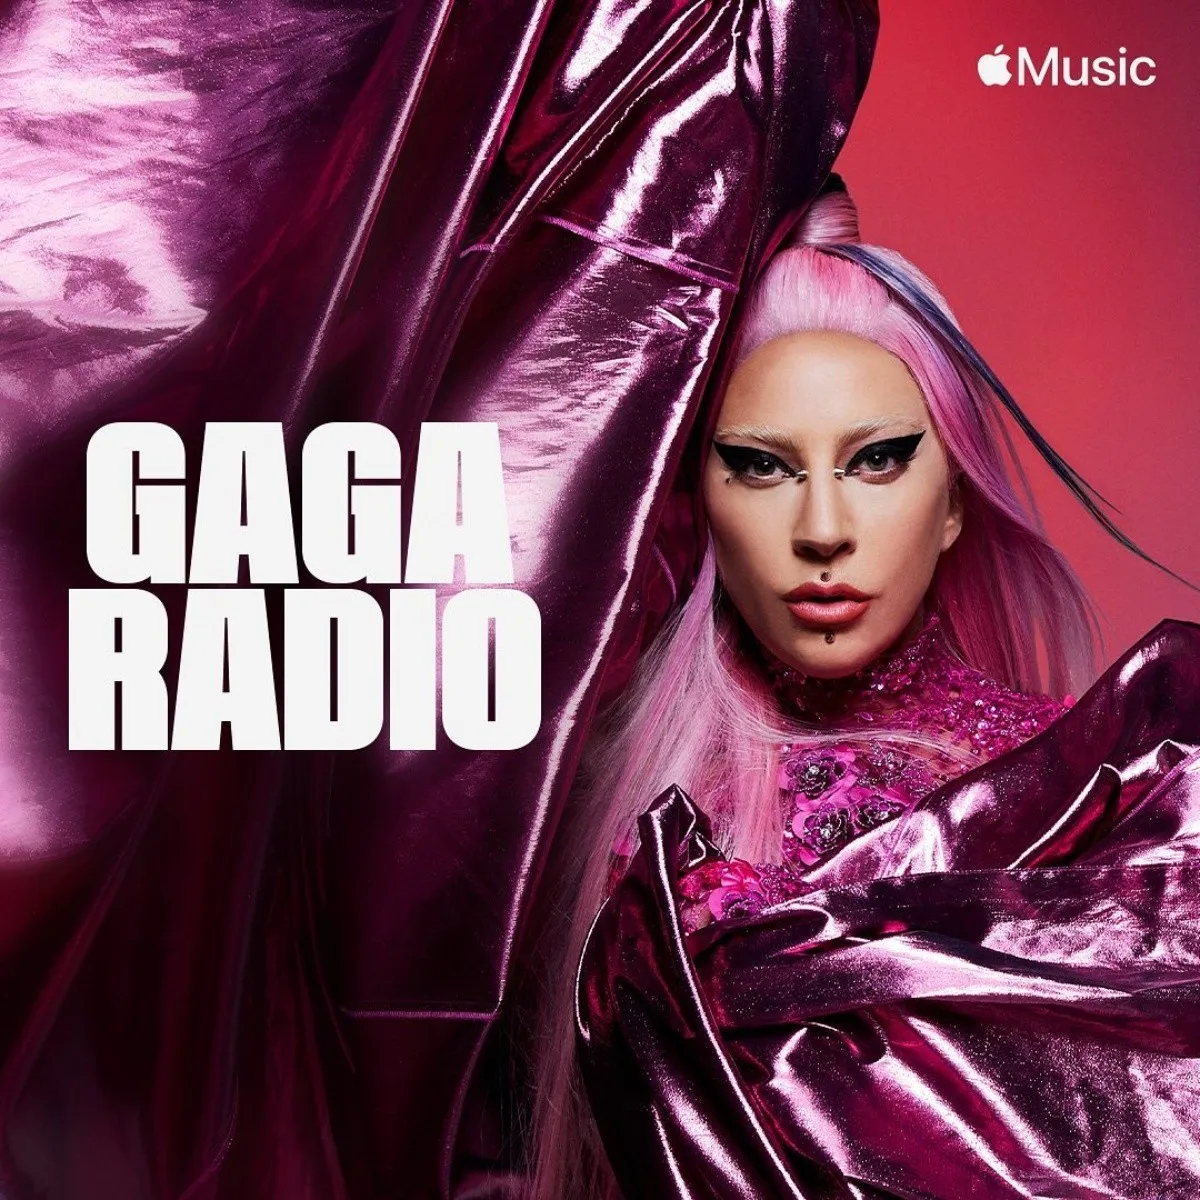 Gaga Radio Artworks